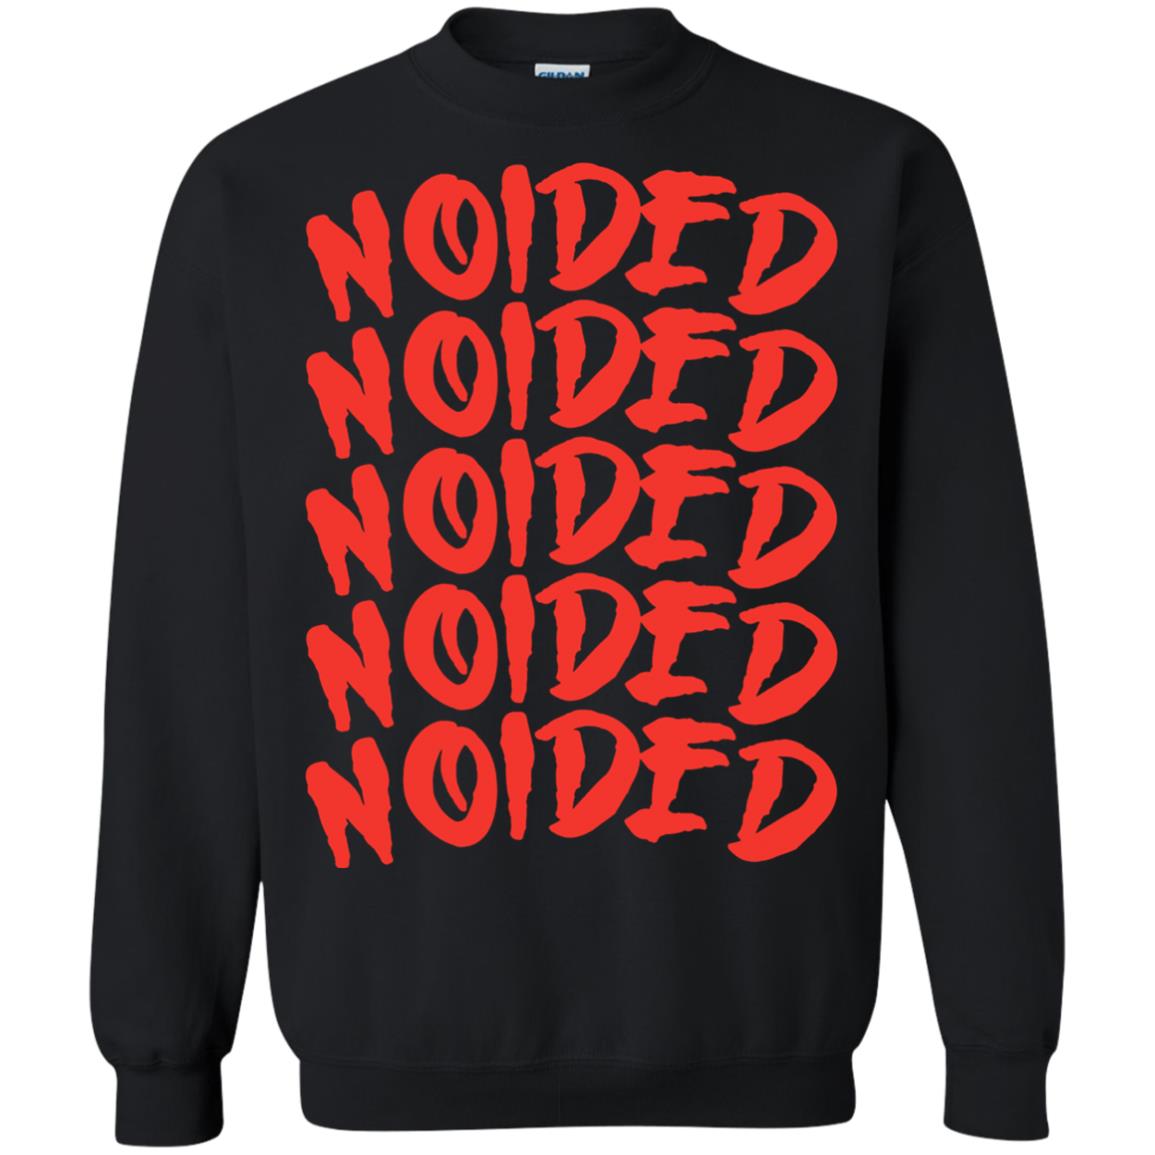 noided sweatshirt - black